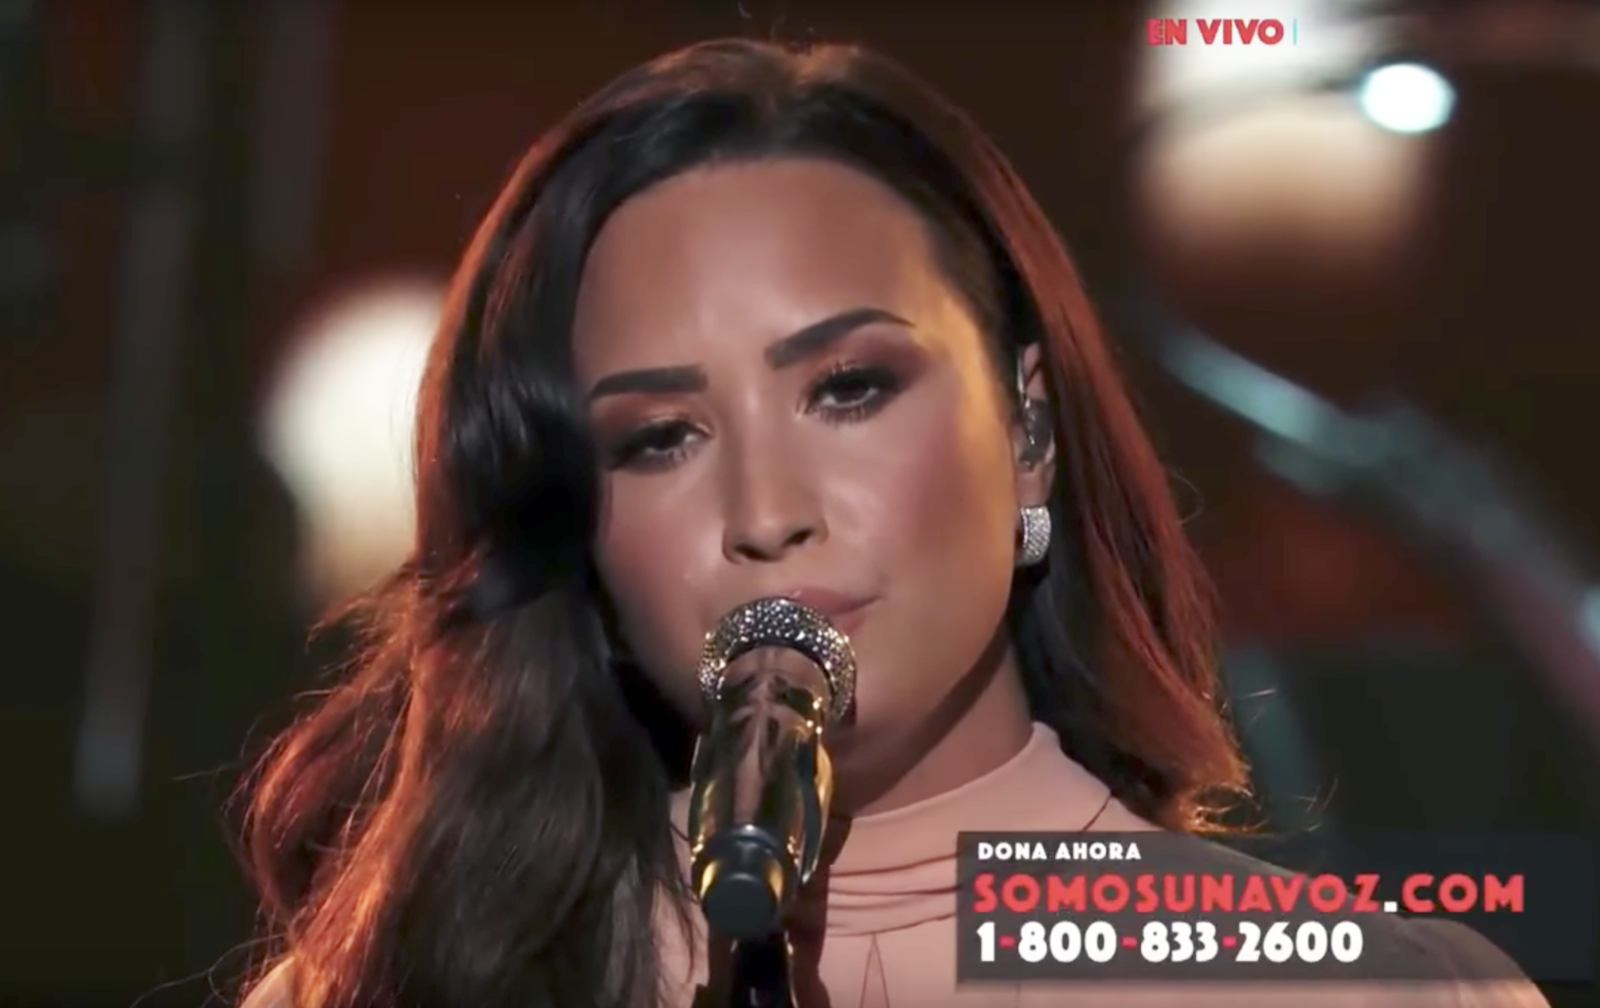 Demi Lovato Performs 'Hallelujah' - Demi Lovato's One Voice: Somos Live!  Performance